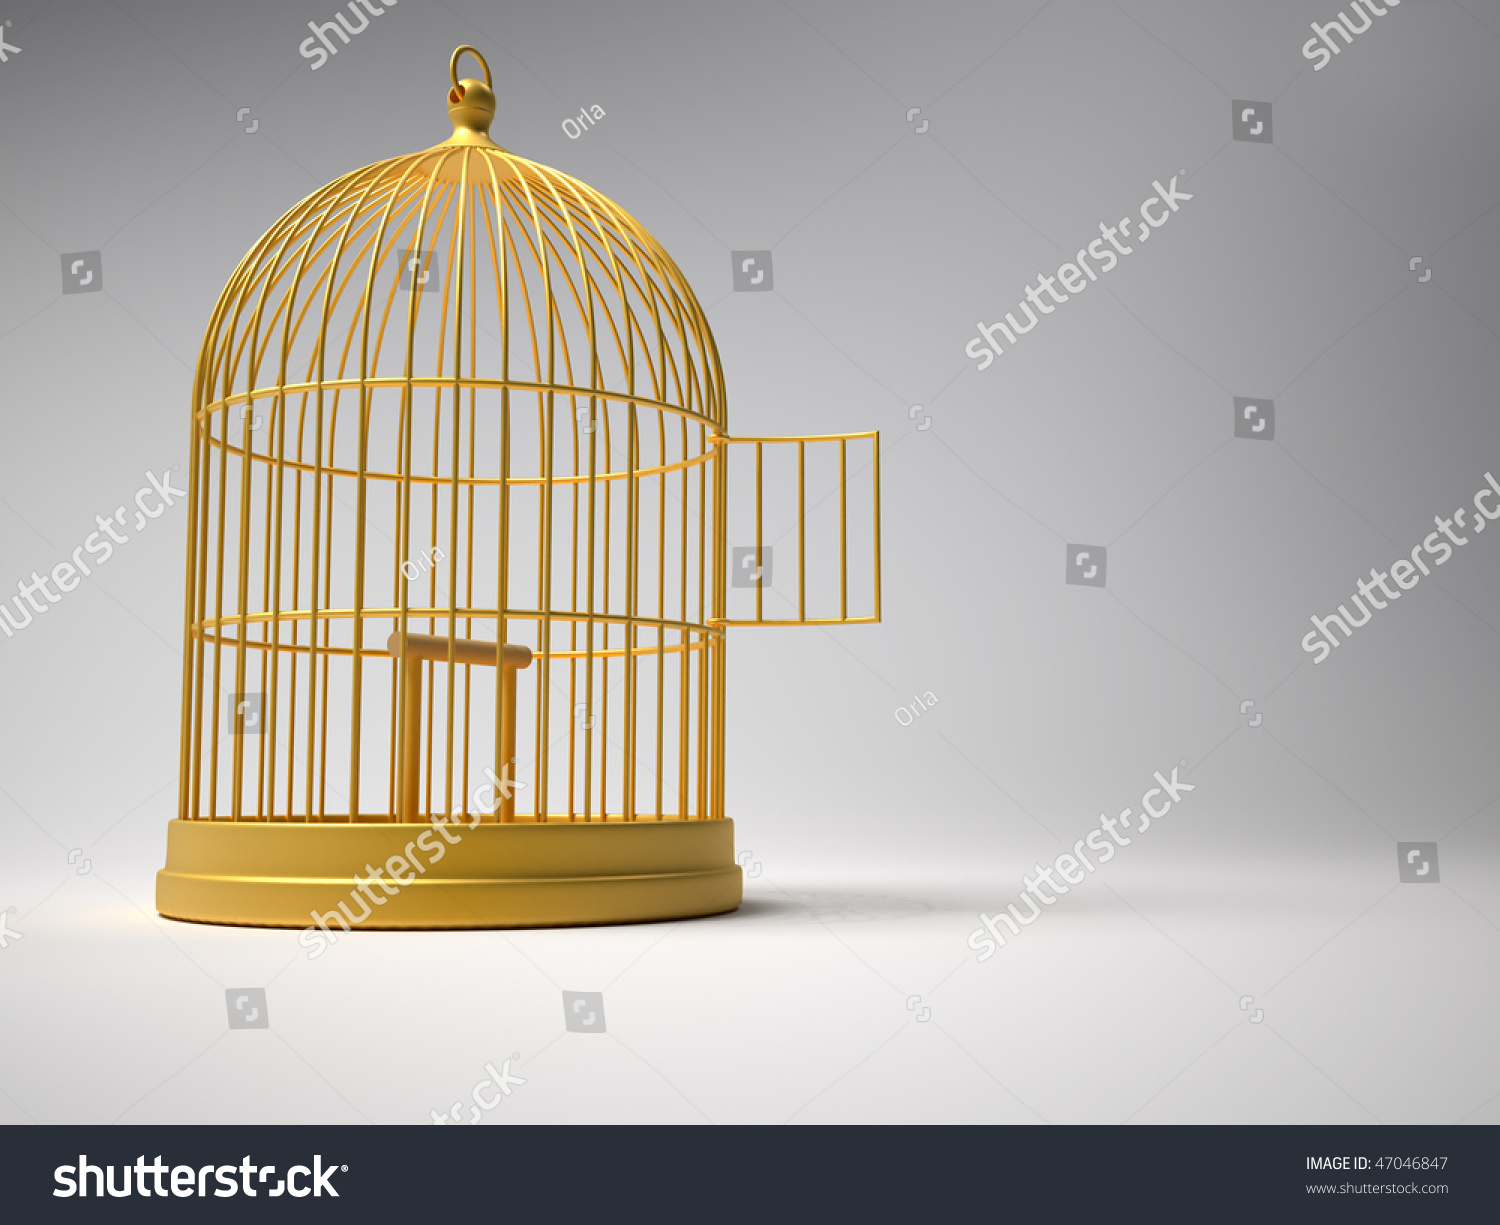 3d Render Illustration Of Golden Bird Cage - 47046847 : Shutterstock